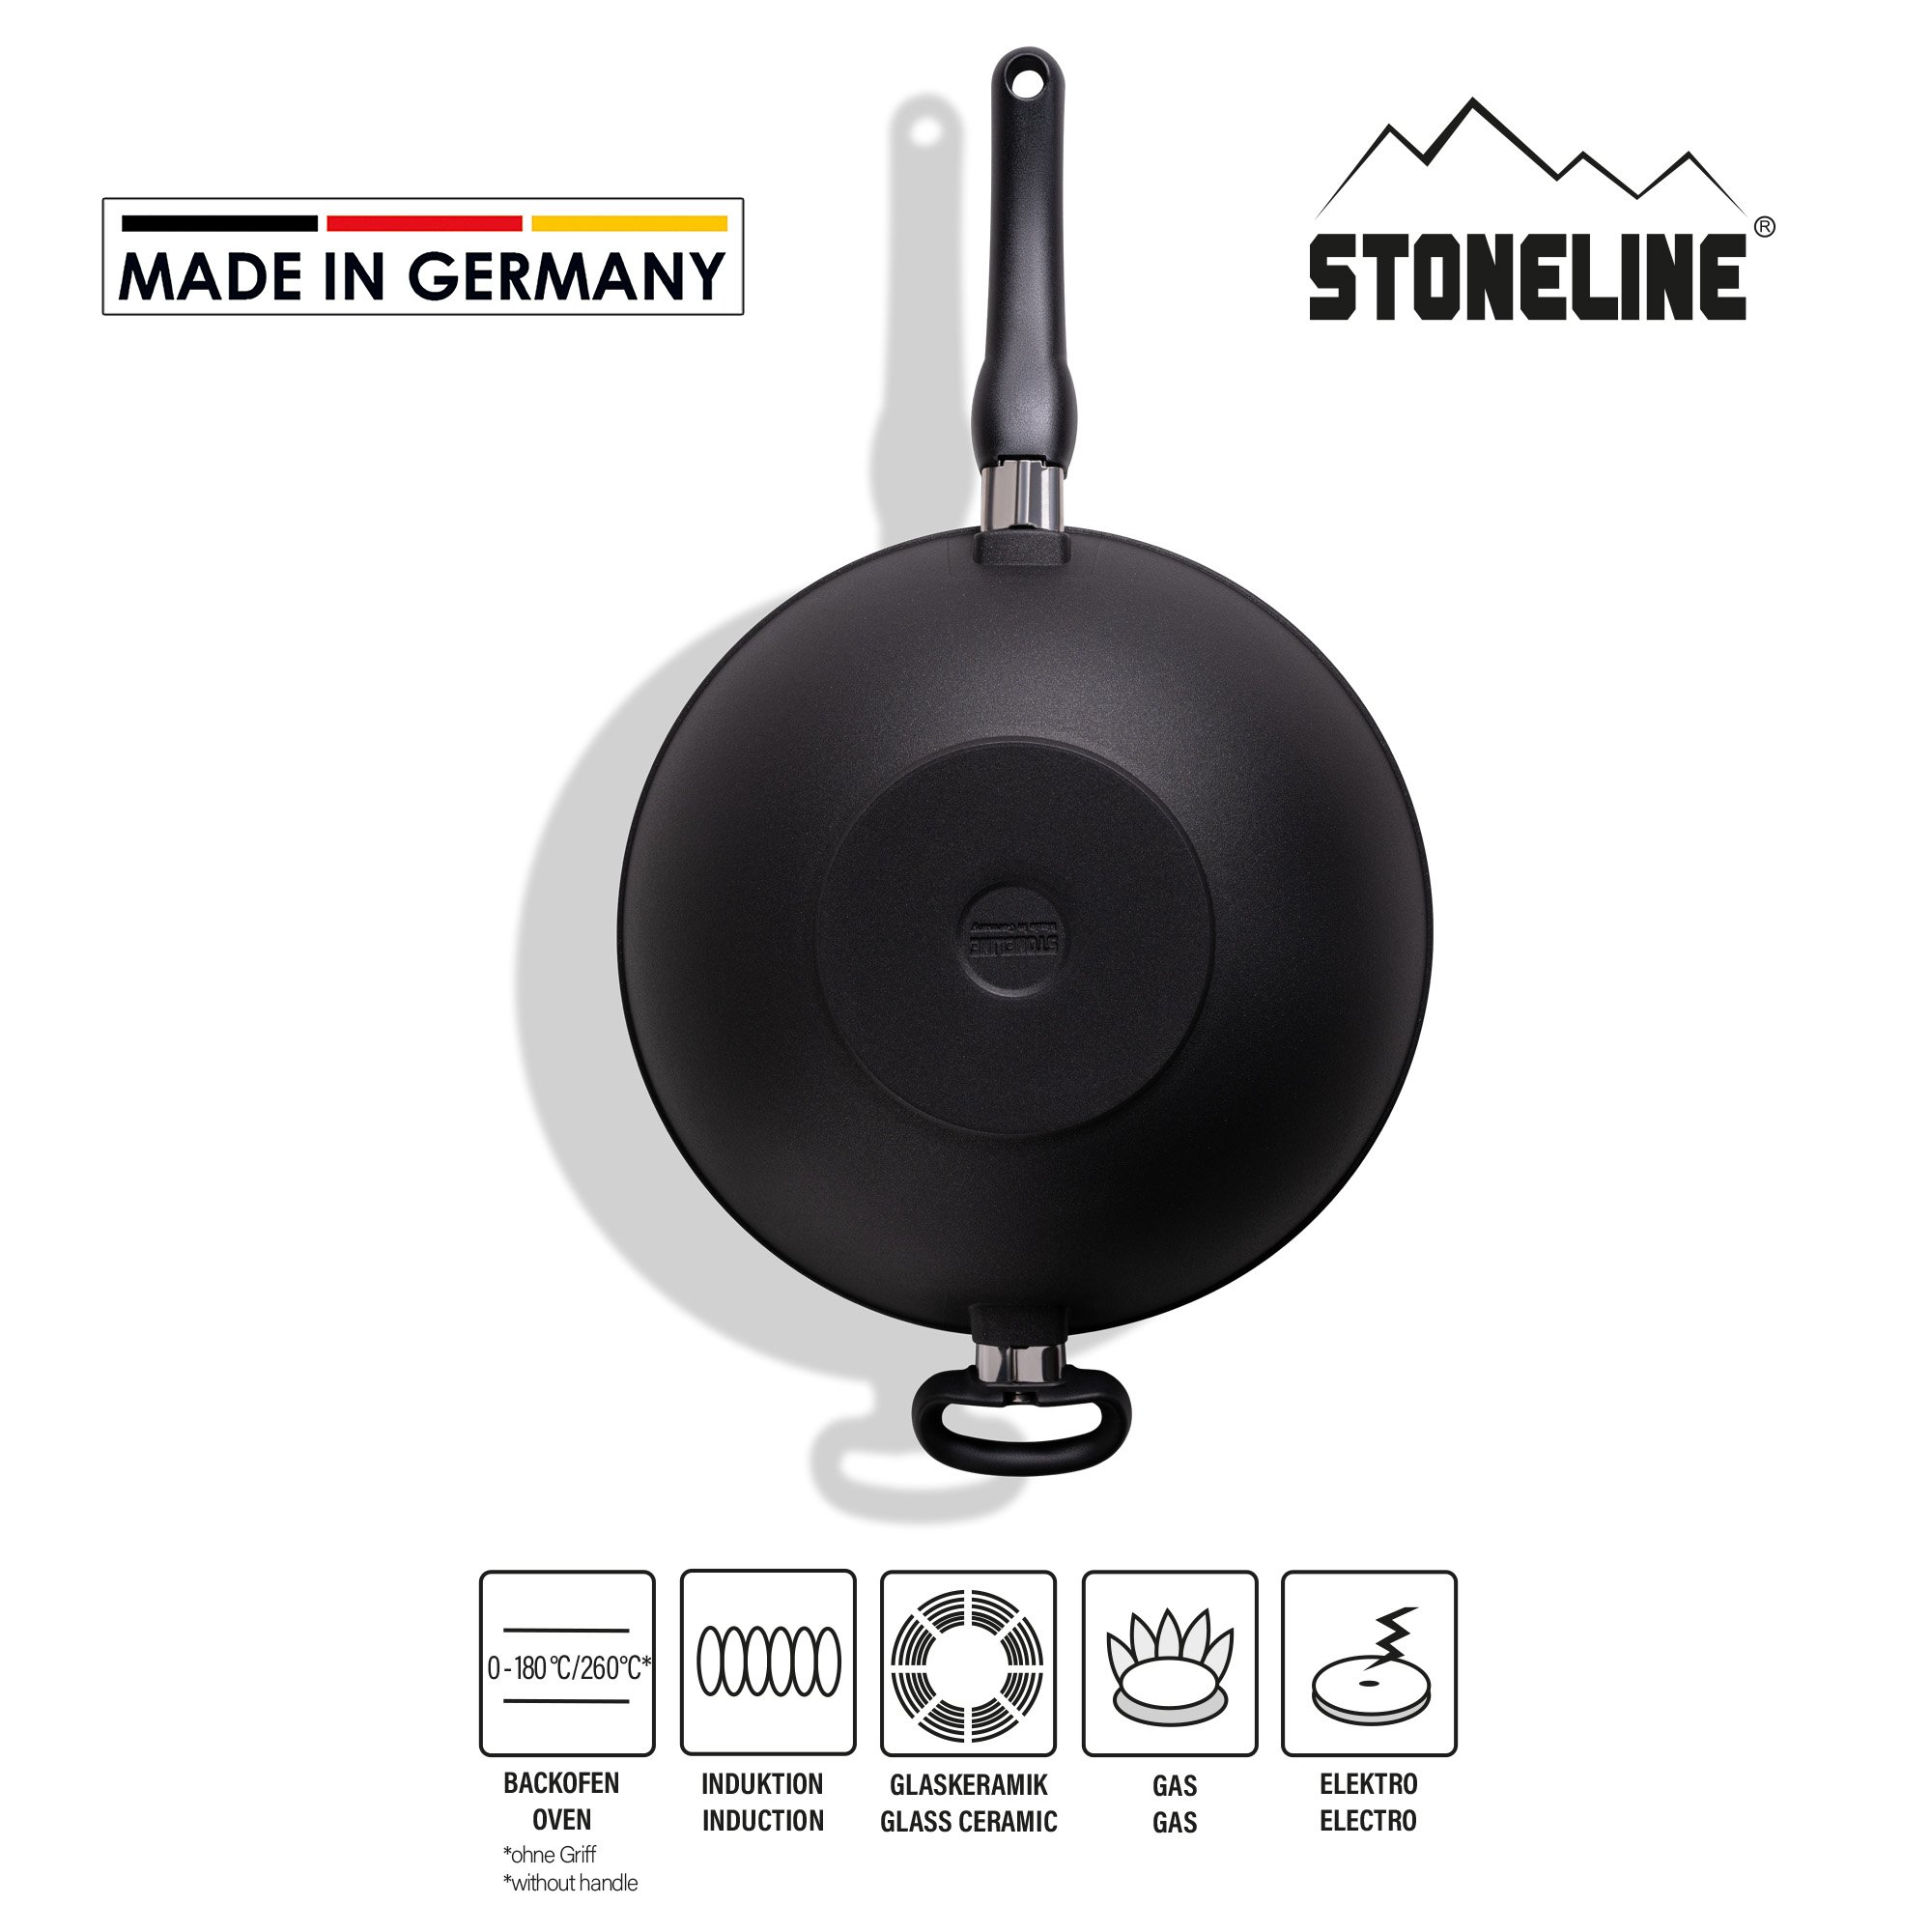 STONELINE® Poêle Wok antiadhésive 32 cm, poignée amovible, Made in Germany